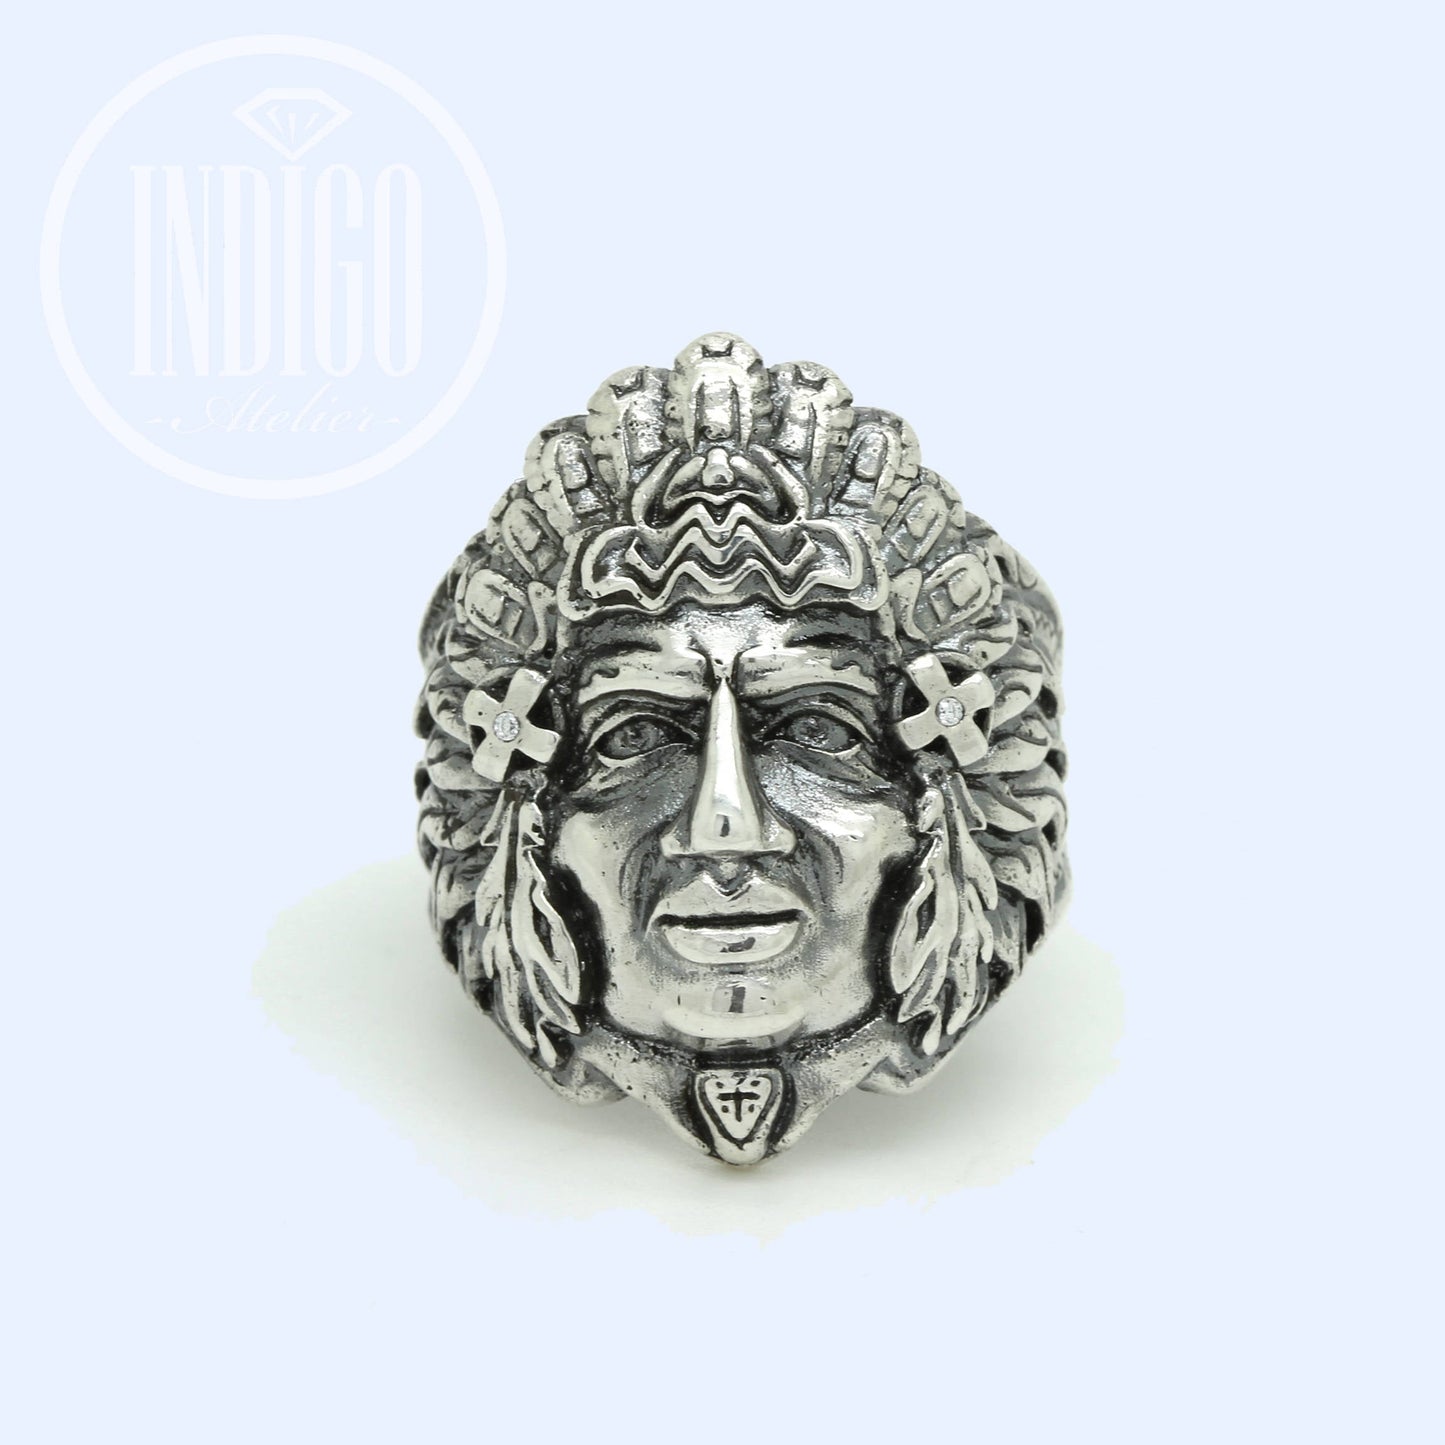 Geronimo Legendary Indian Apache's Hero Men's Ring Silver 925